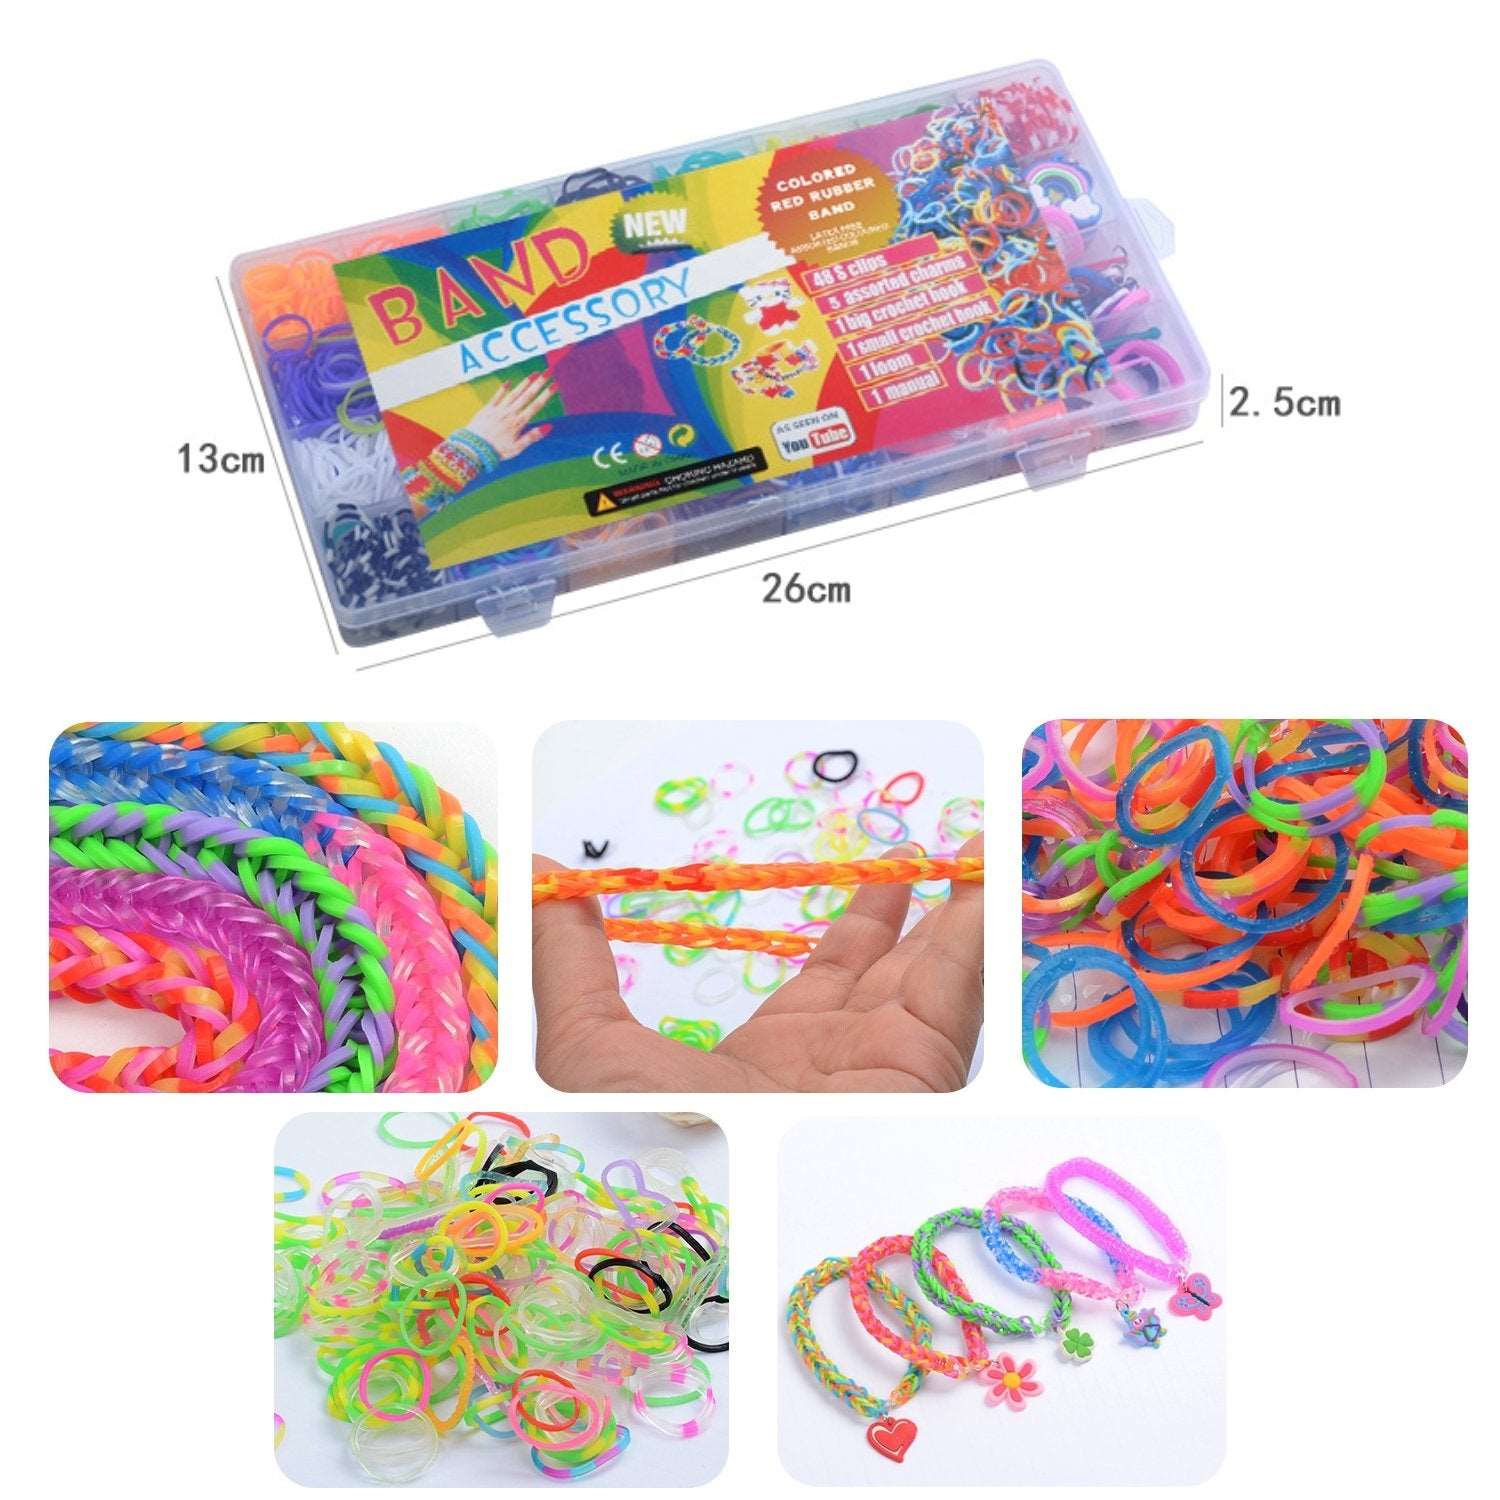 15/18/32/36 Grids Colorful Loom Bands Set Candy Color Bracelet Making Kit  DIY Rubber Band Woven Bracelet Kit Girls Craft Toys Gifts | Wish